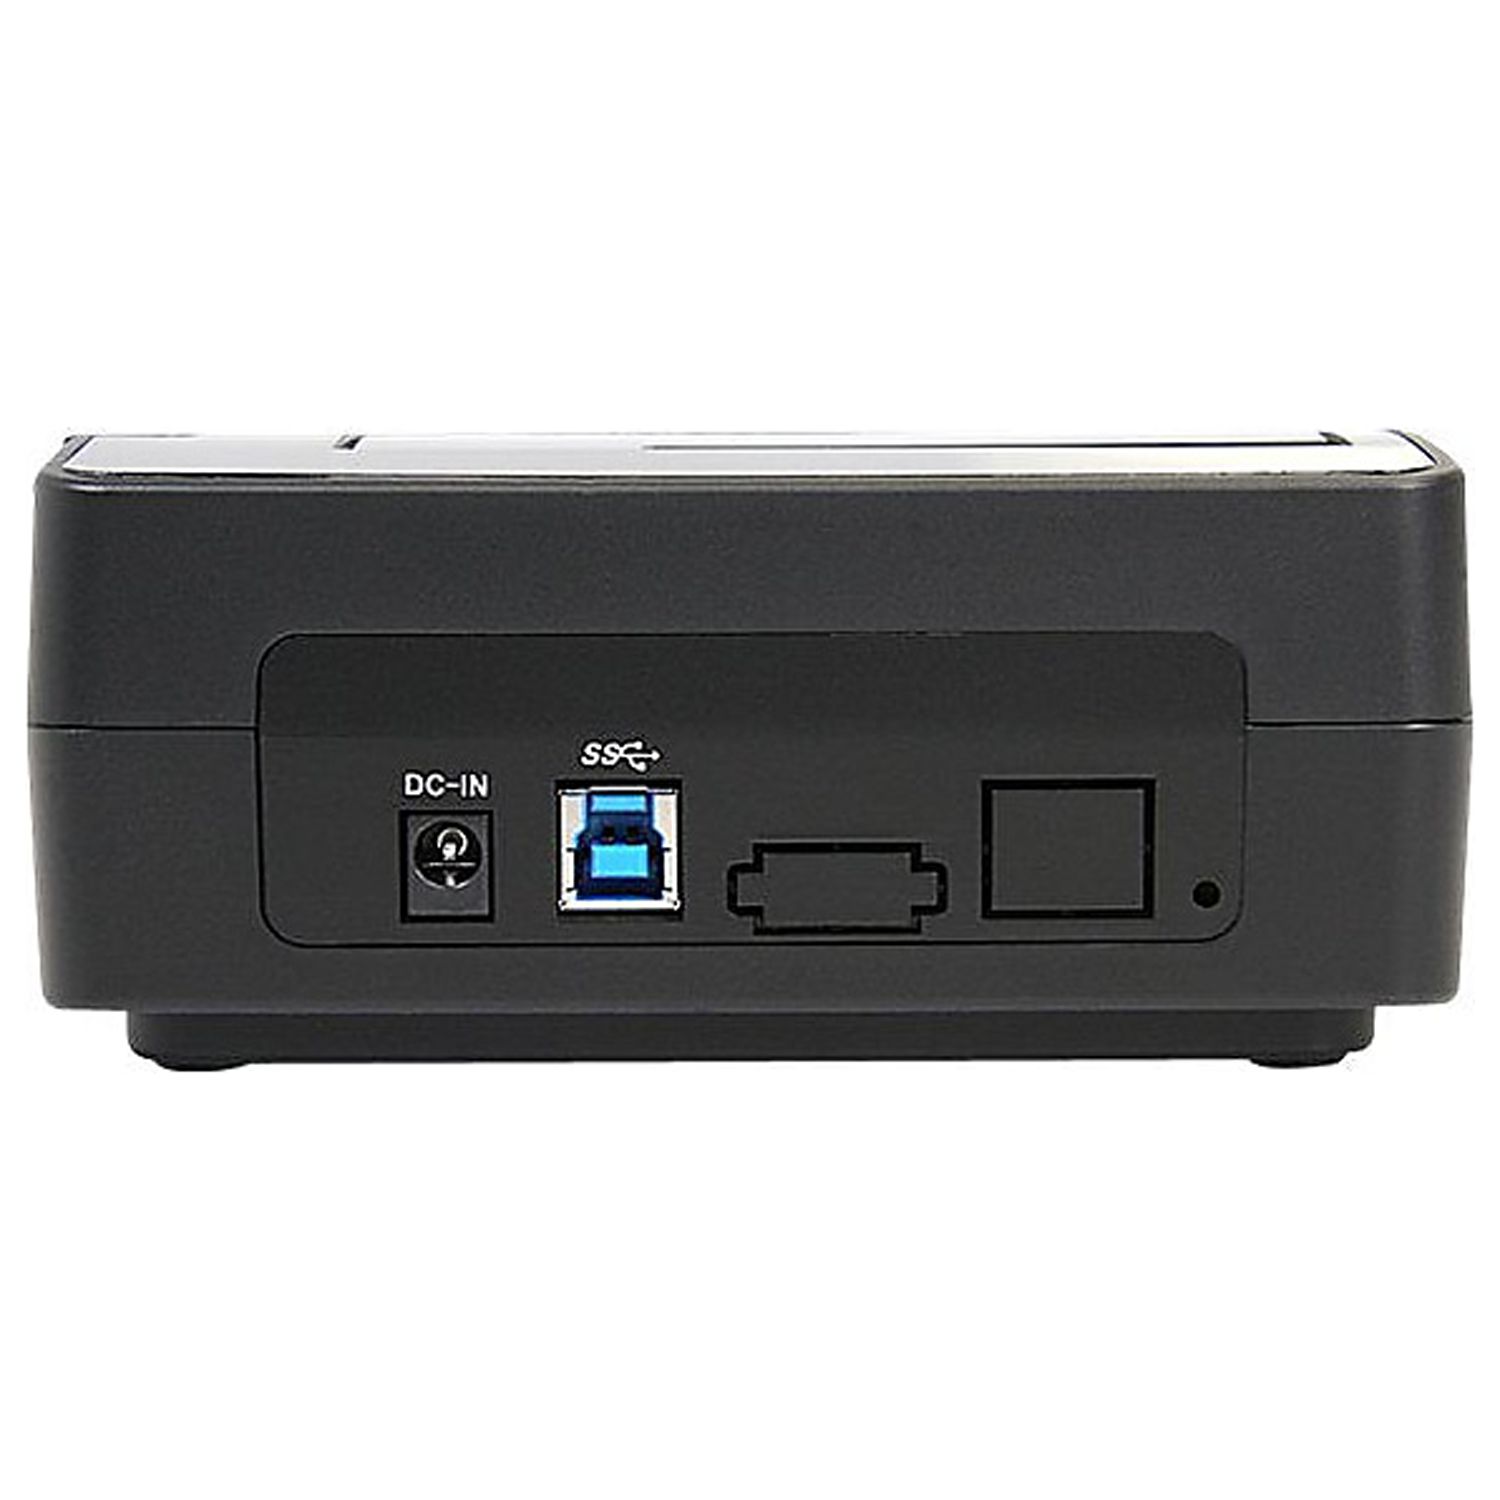 StarTech USB 3.0 SATA Hard Drive Docking Station - image 2 of 2